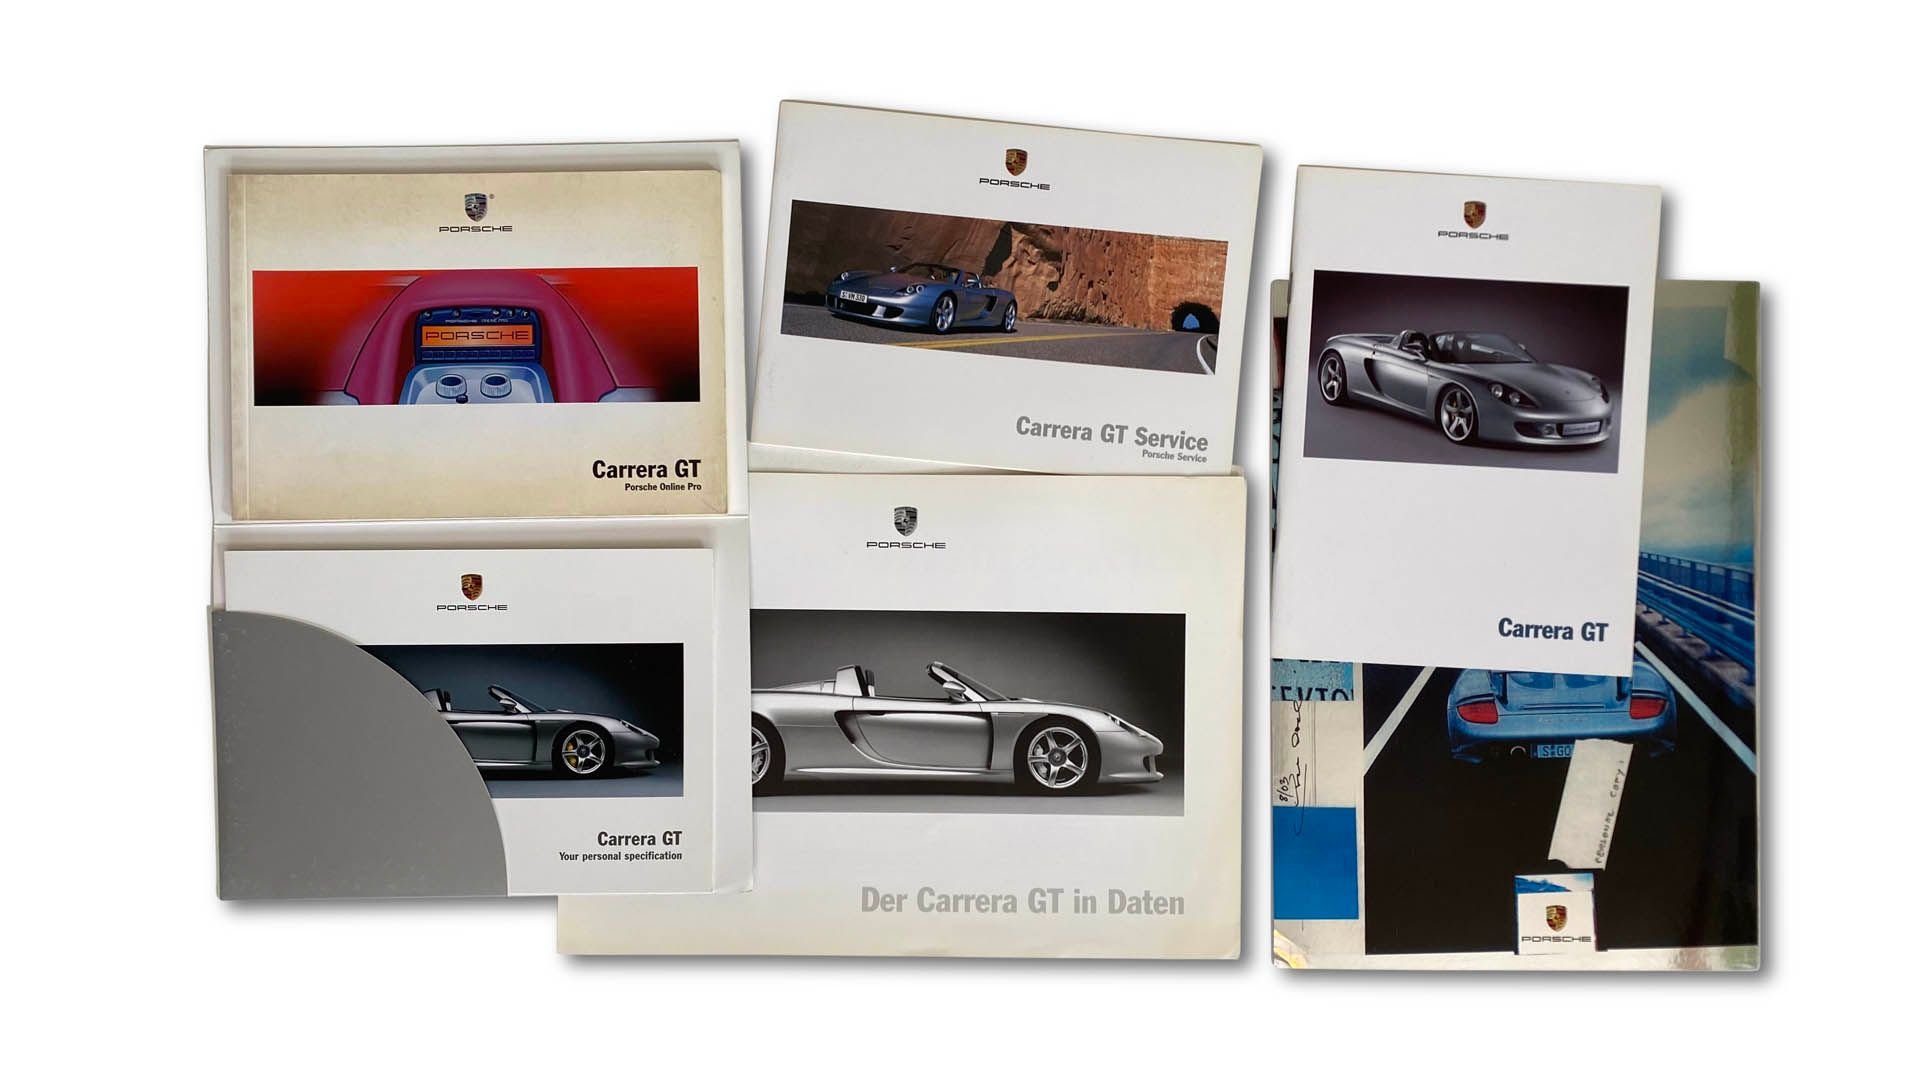 For Sale Porsche Carrera GT Literature - Assorted Brochure, Internal Dealer Literature, and Press Kits